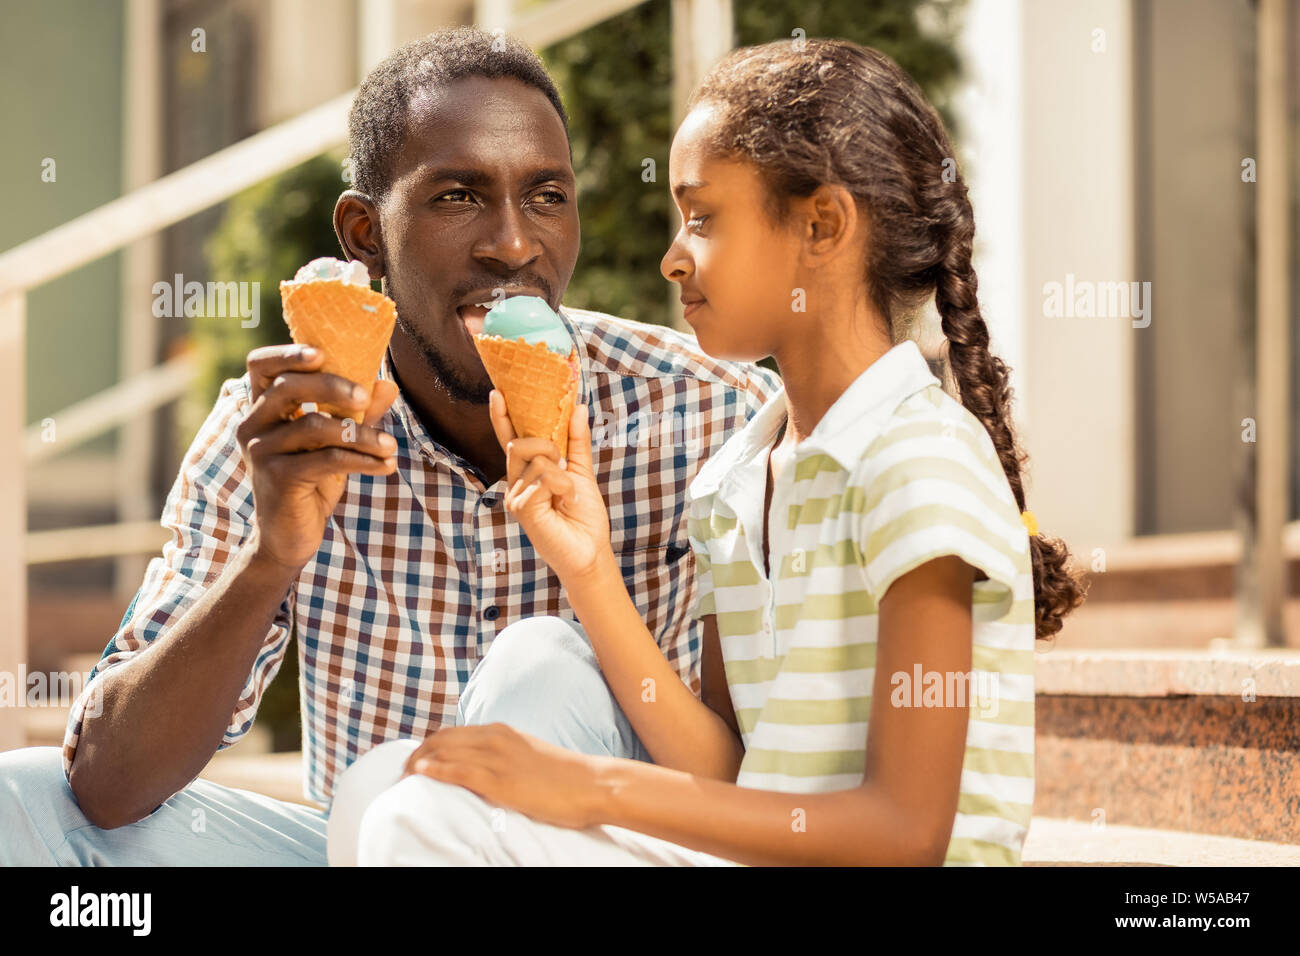 Thoughtful young man enjoying taste of ice-cream Stock Photo